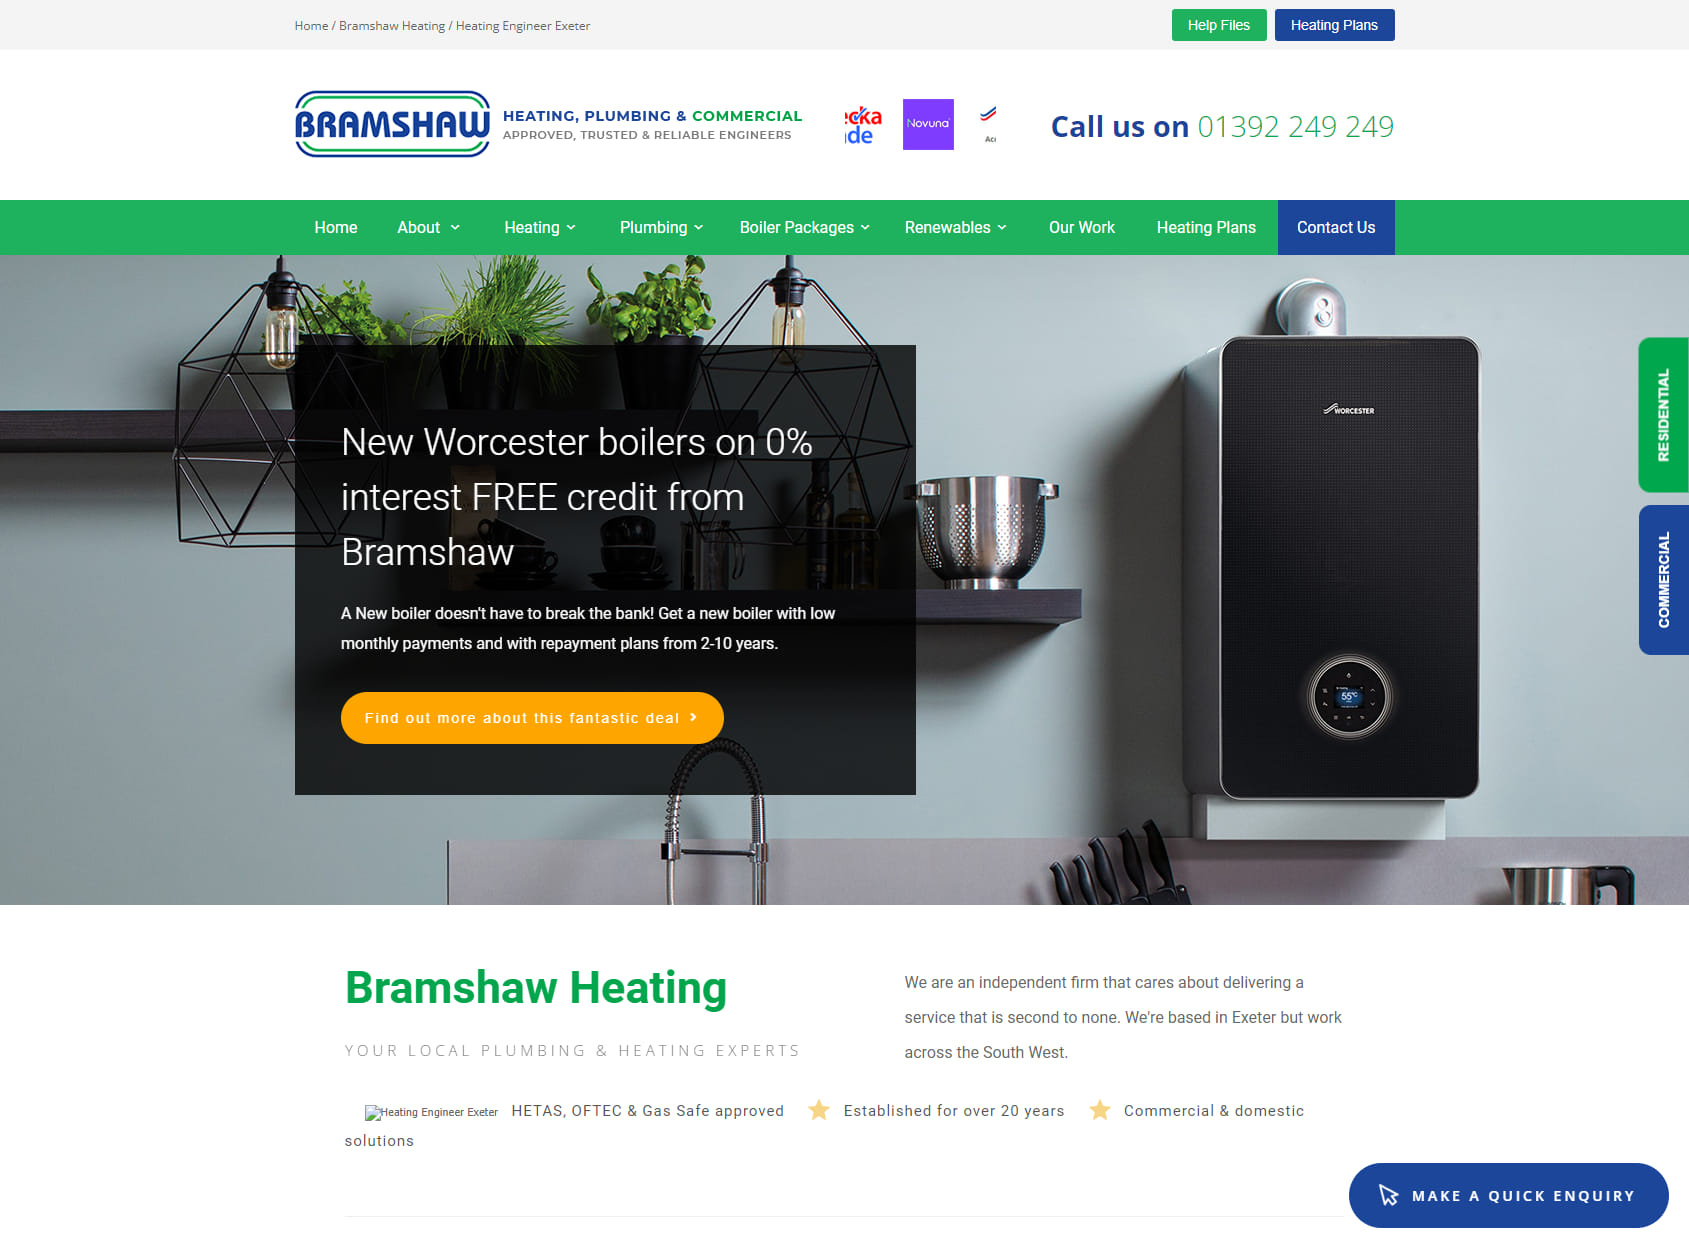 Bramshaw Heating and Plumbing Ltd